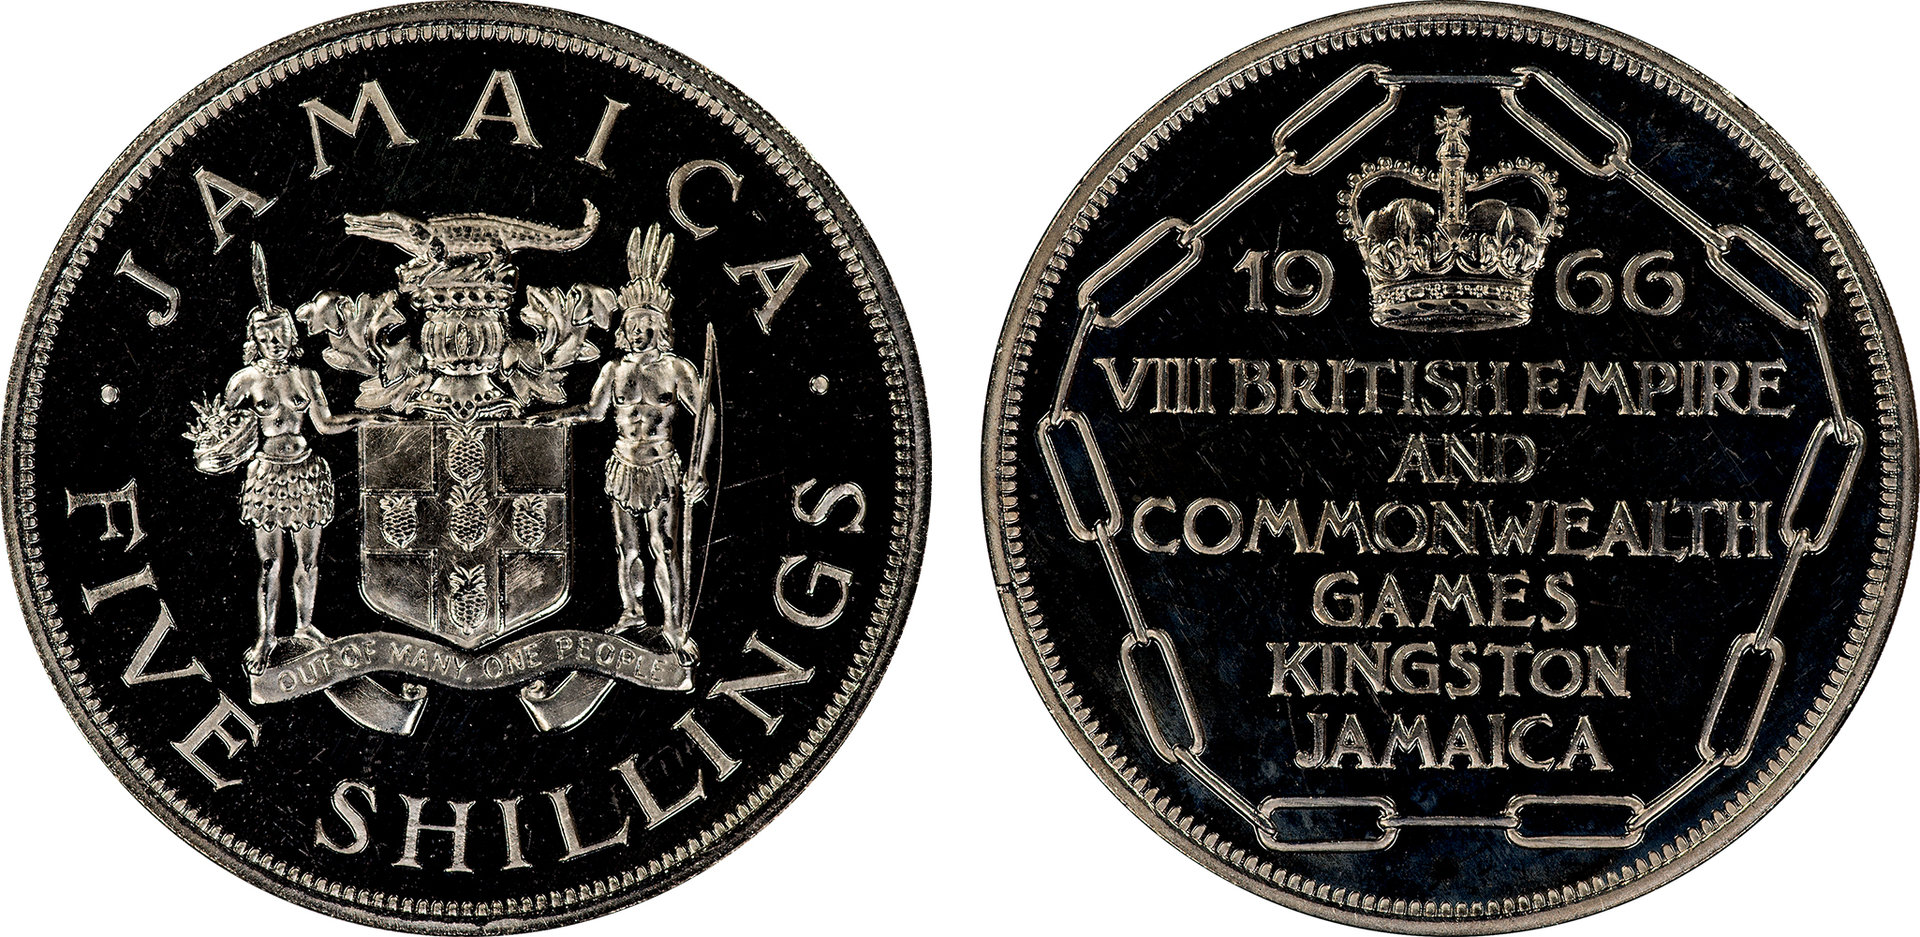 Jamaica - 1966 Proof 5 Shillings.jpg